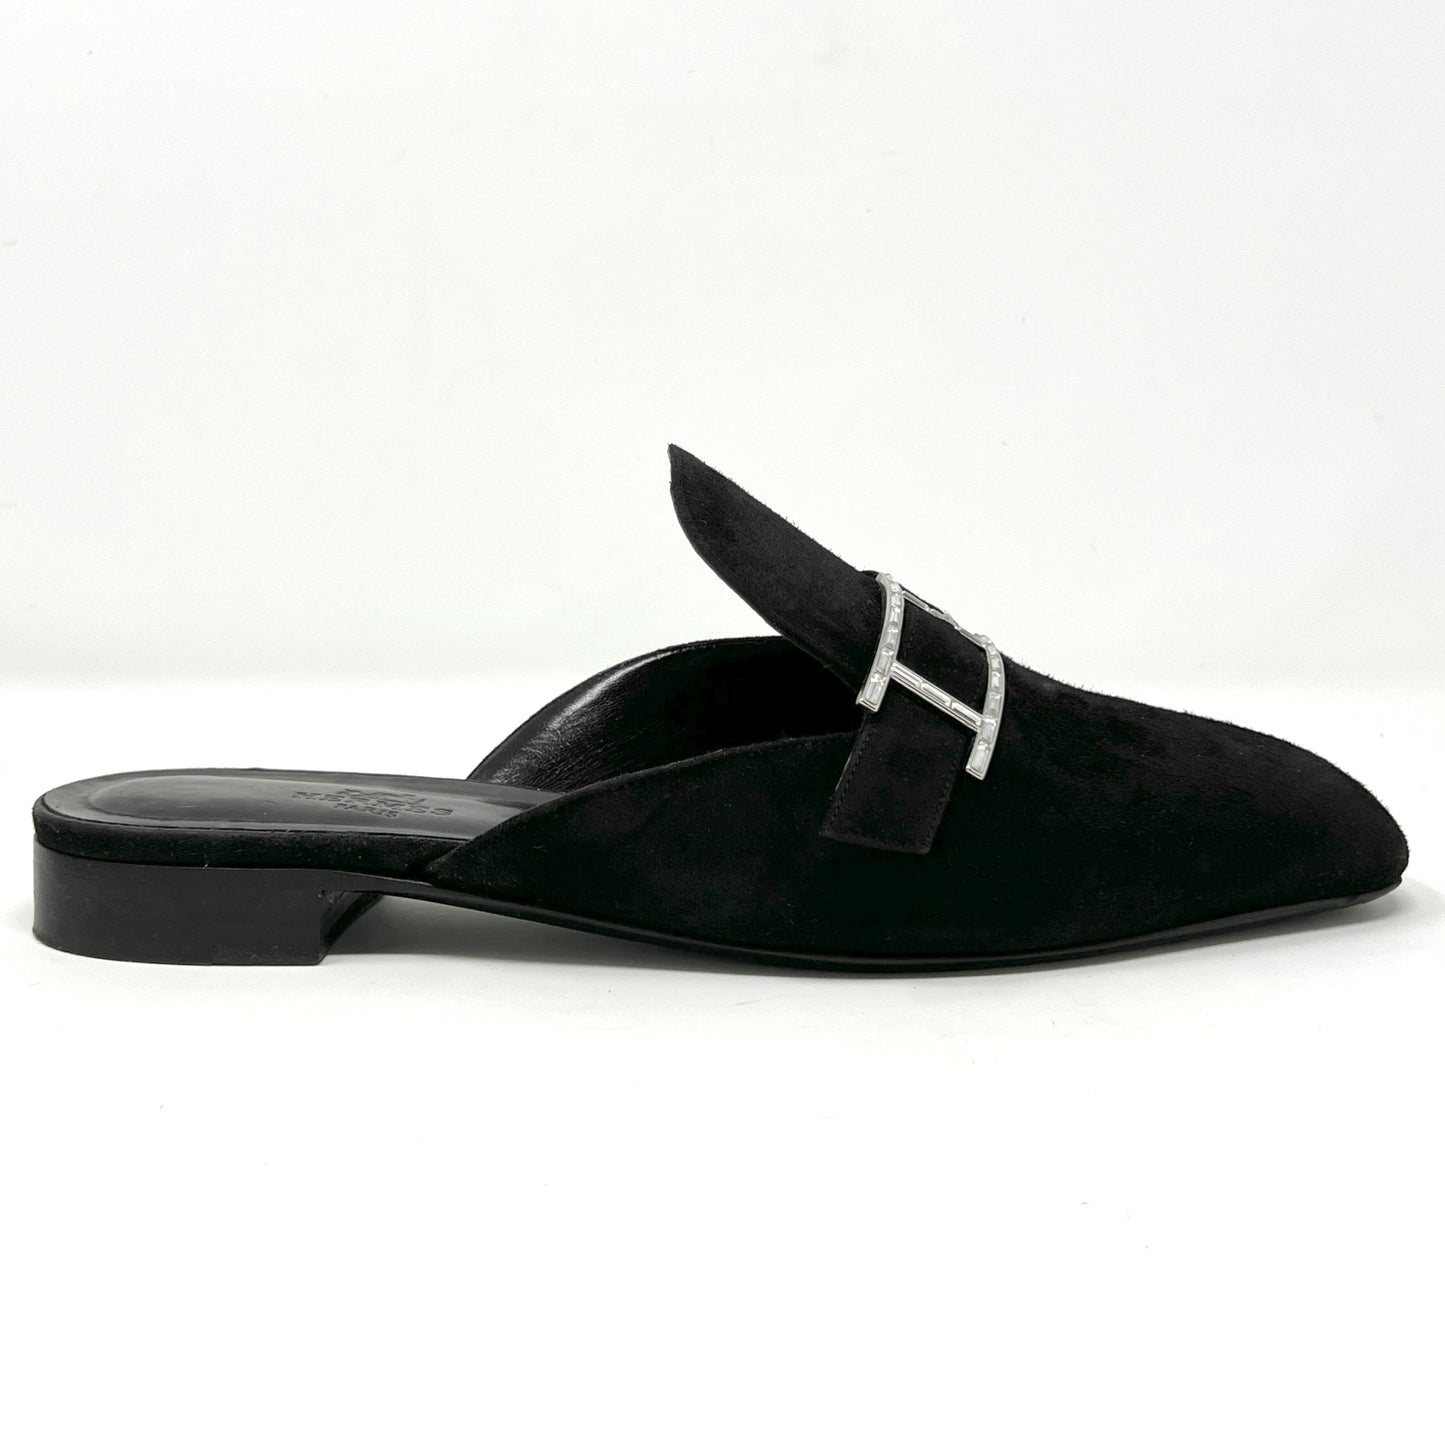 Hermes Black Suede Goat Leather Beauty Crystal "H" Logo Loafer Mules Flats Size EU 37.5